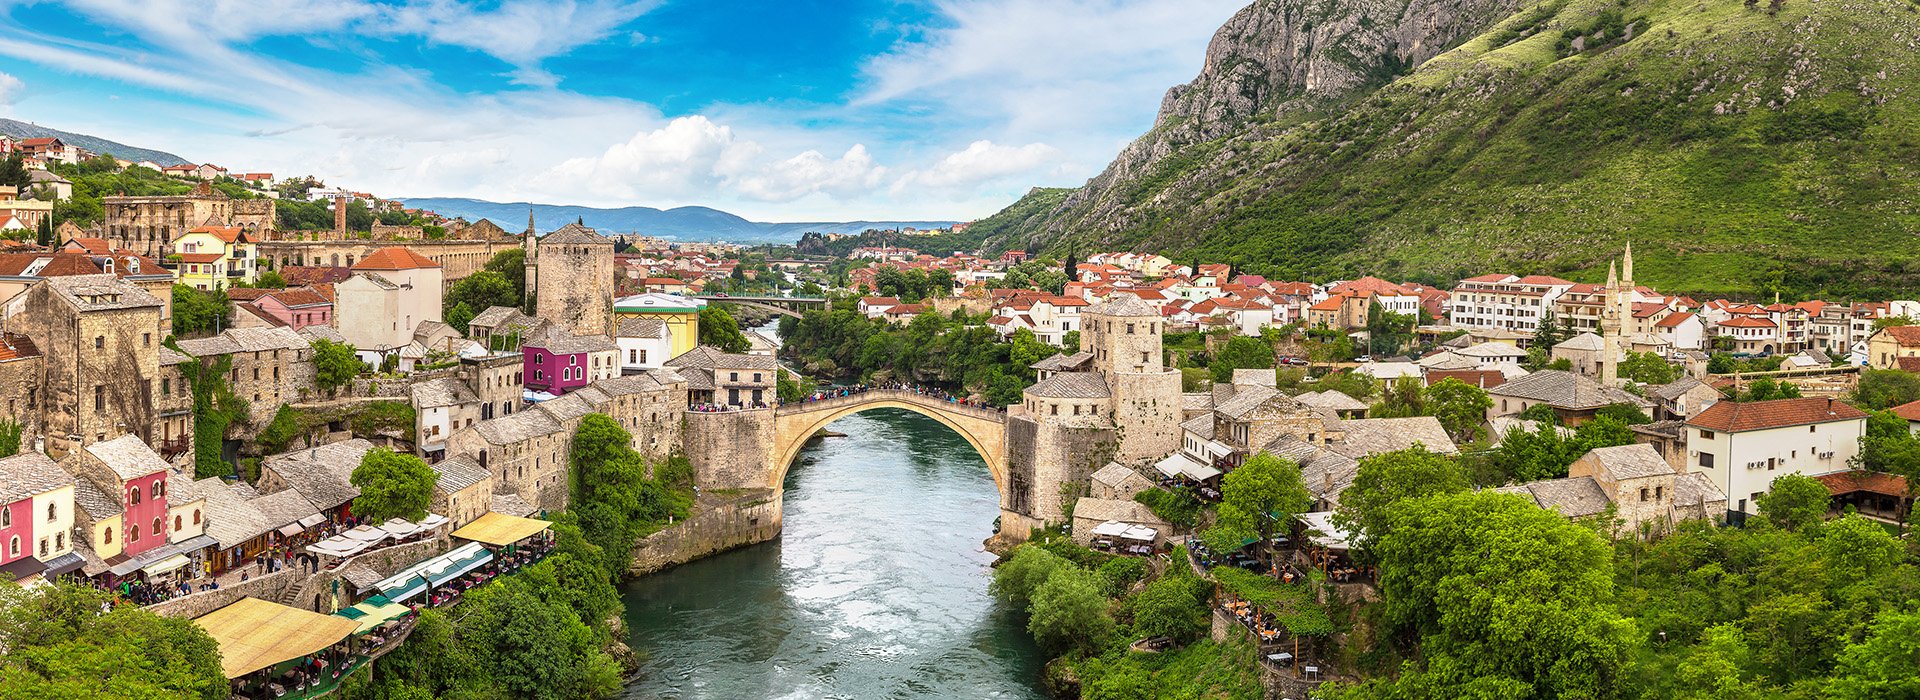 bosnia travel restrictions